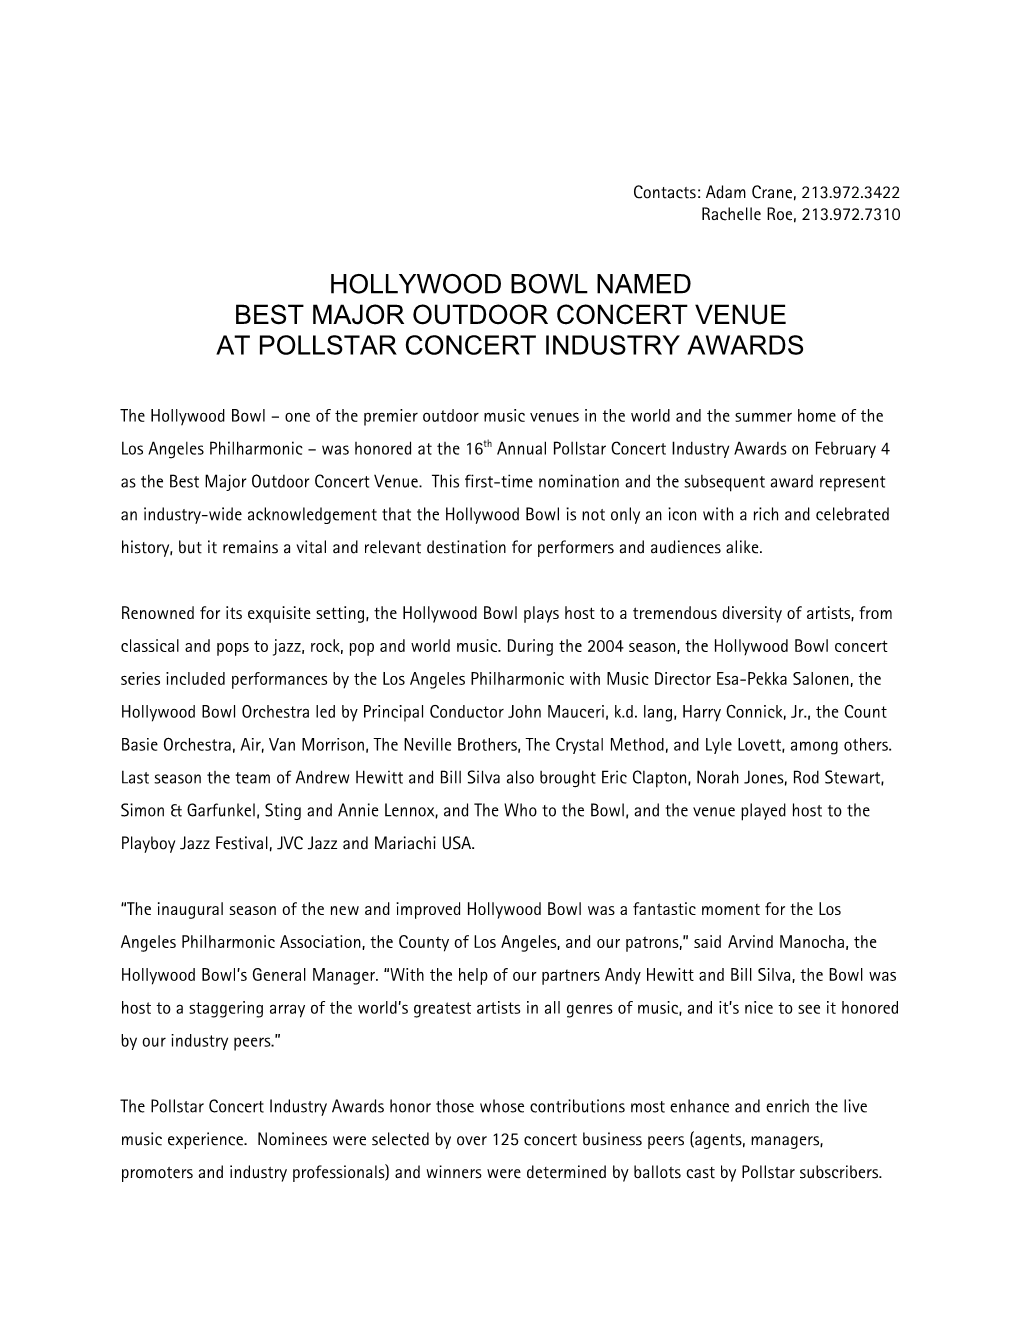 Hollywood Bowl Named Best Major Outdoor Concert Venue at Pollstar Concert Industry Awards